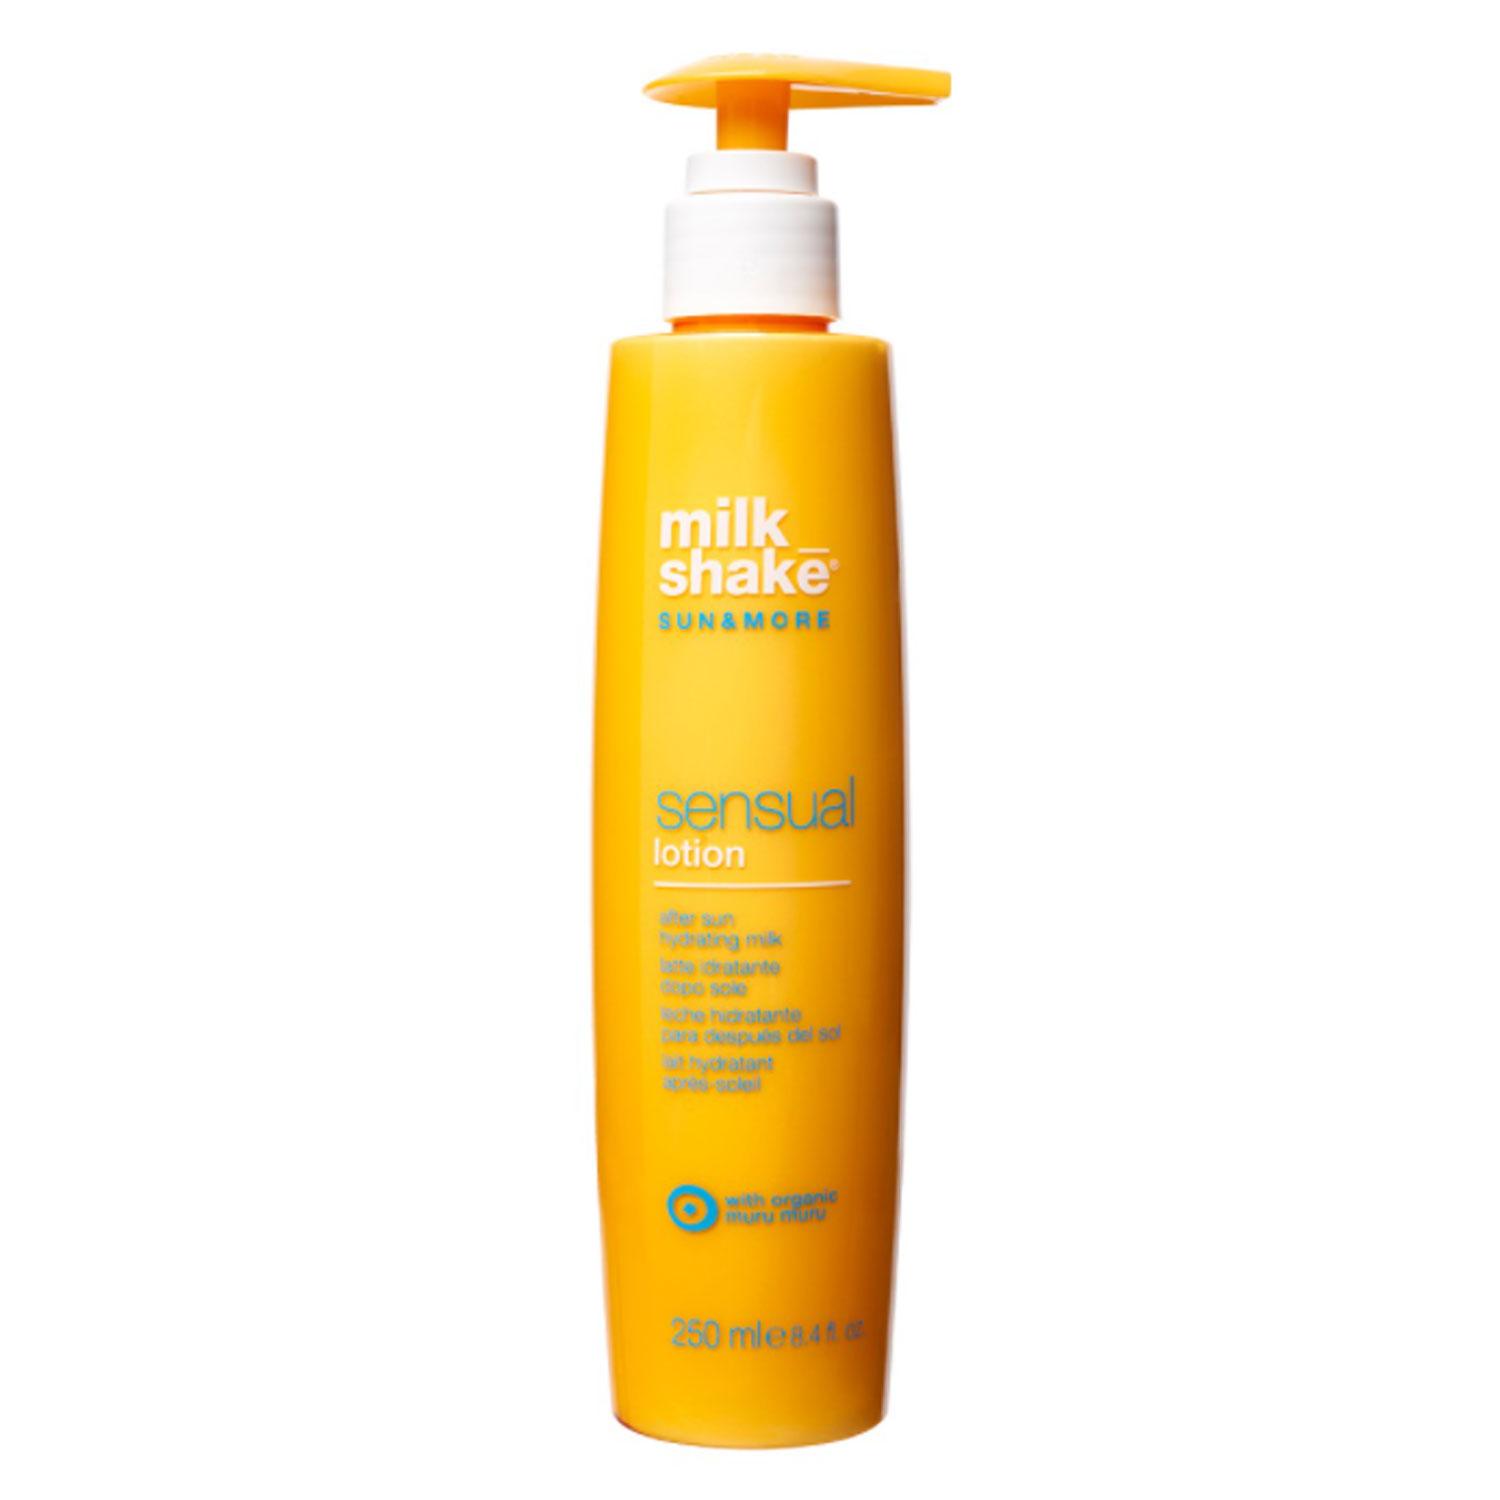 milk_shake sun&more - sensual lotion 